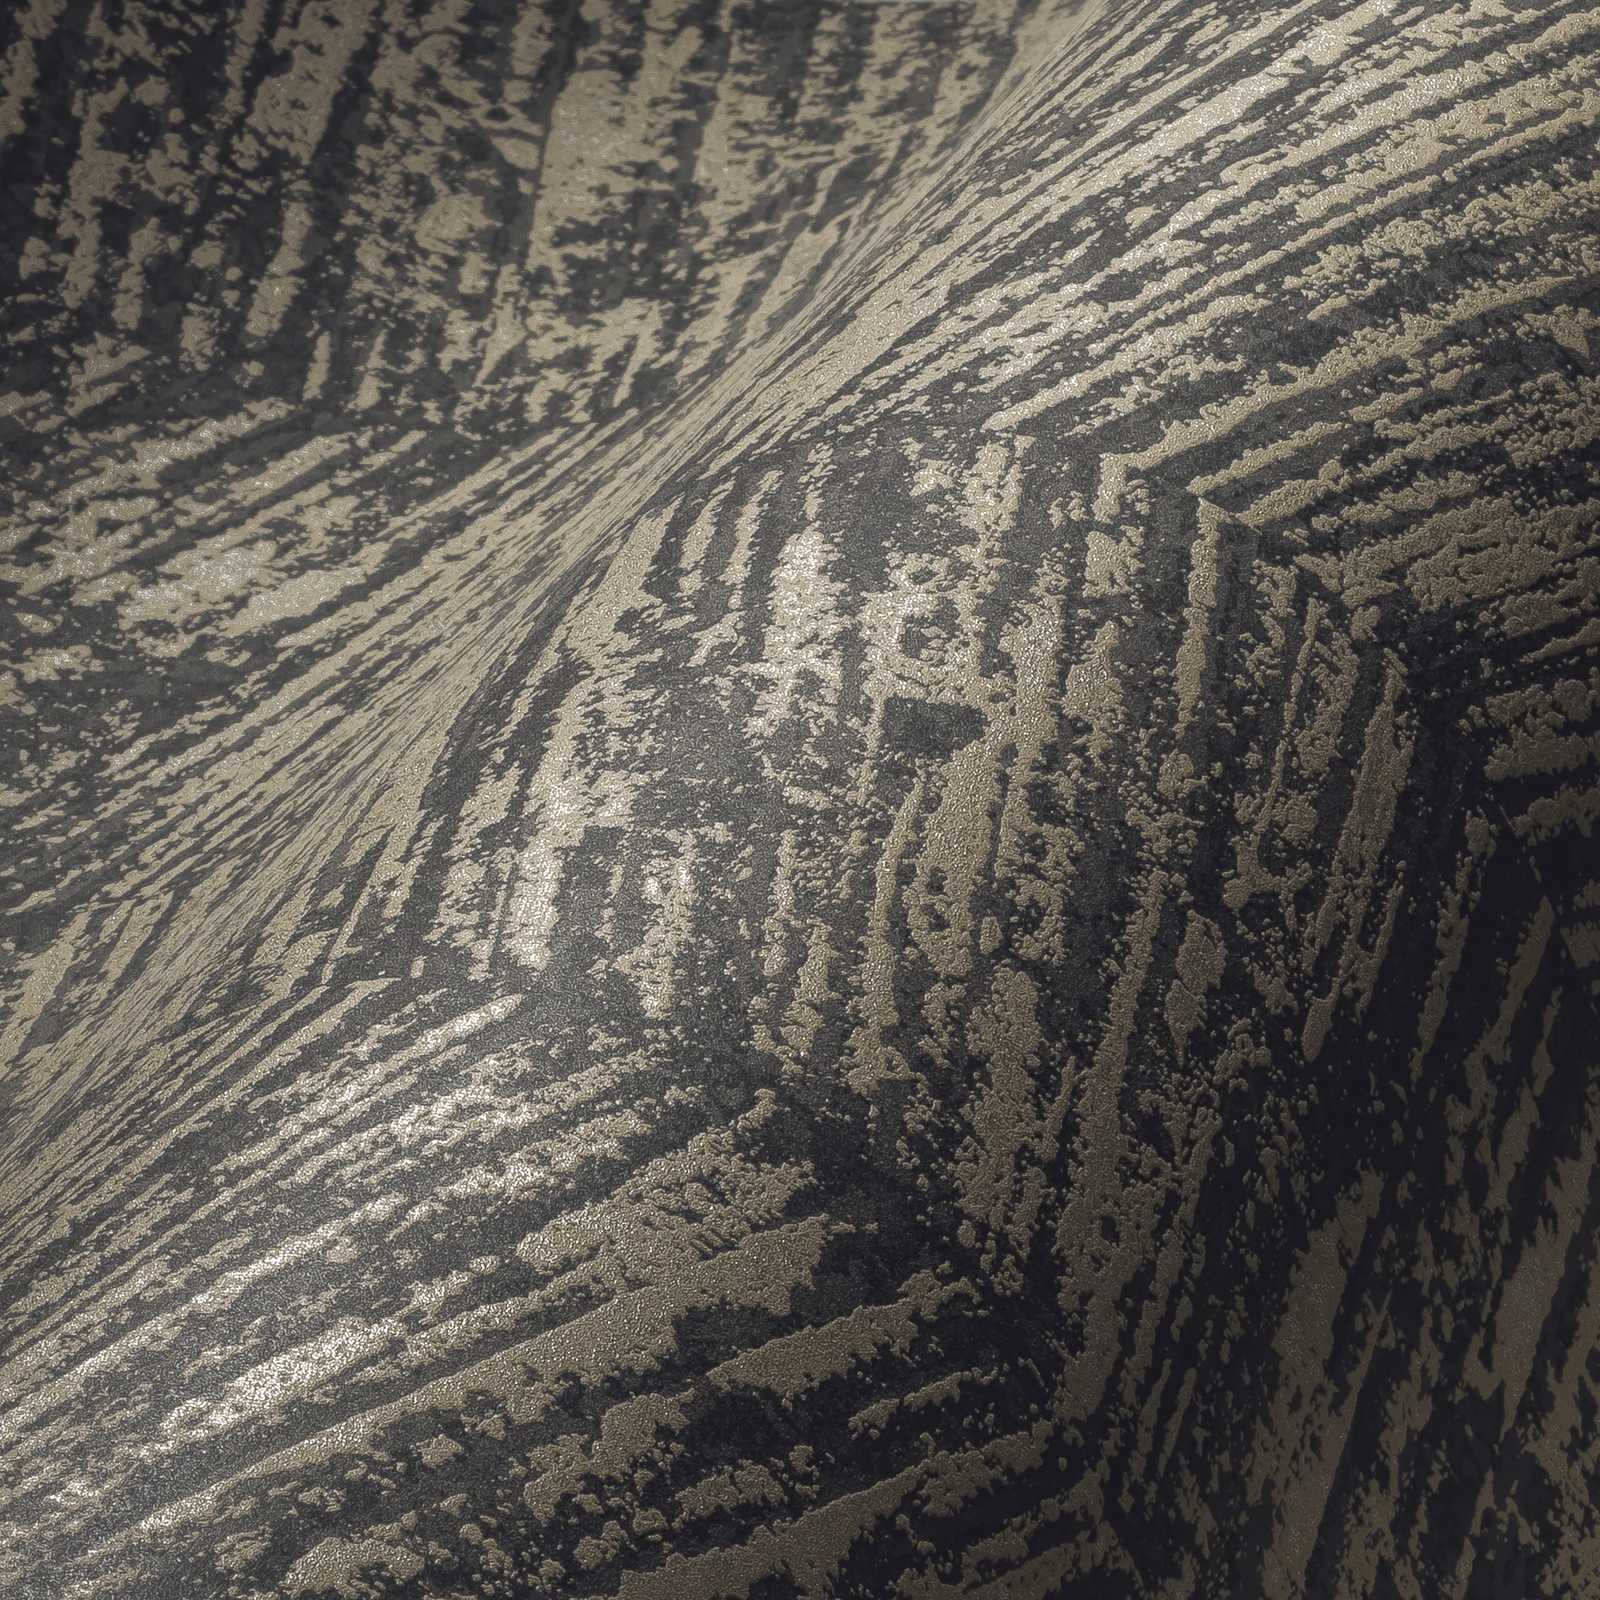             Ethno wallpaper with mottled stripe pattern - grey, metallic, black
        